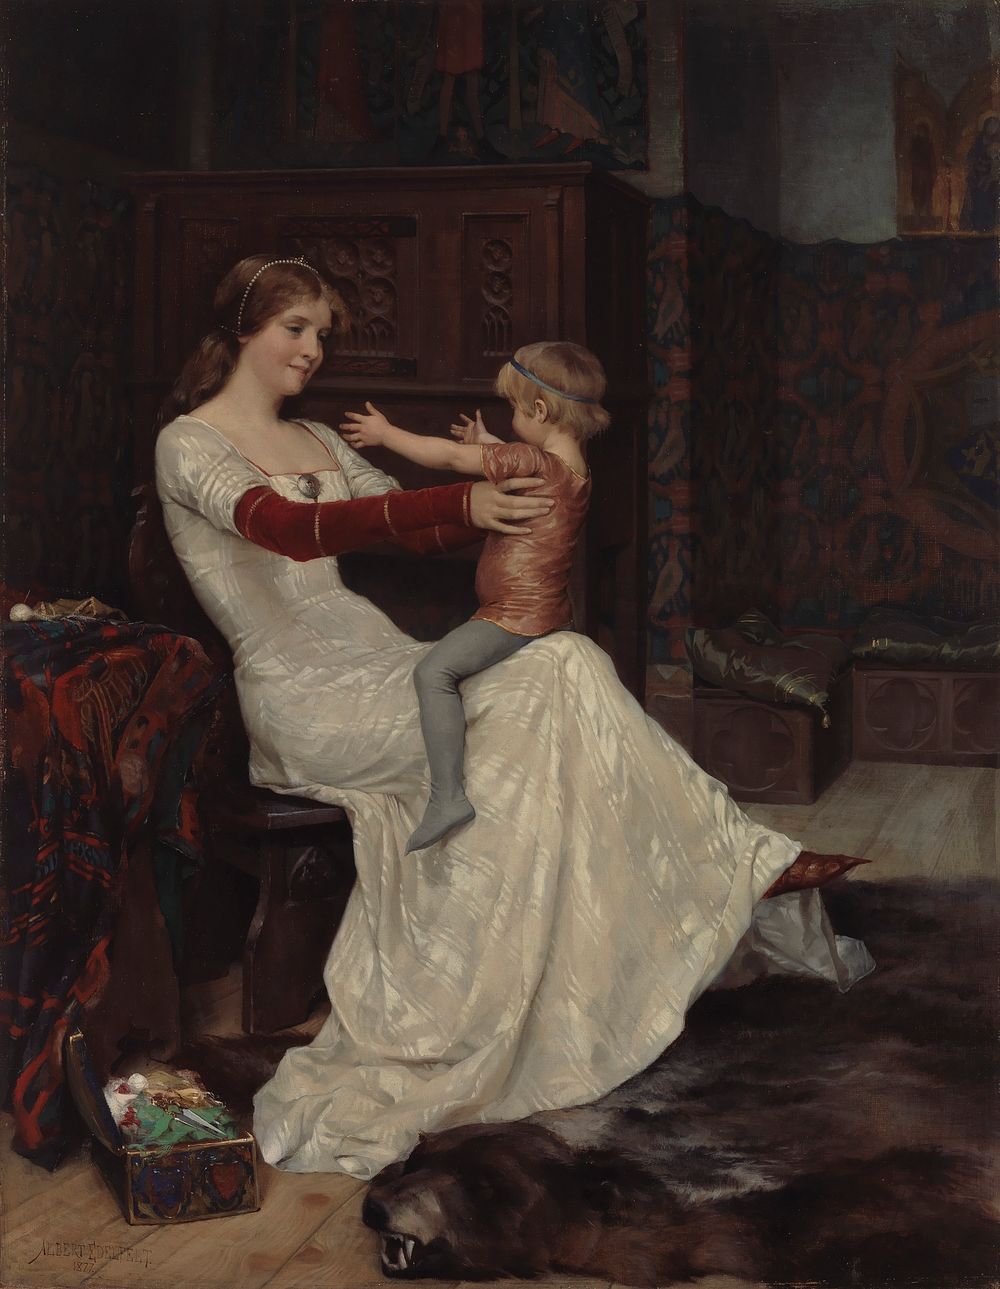 Queen bianca, 1877 by Albert Edelfelt